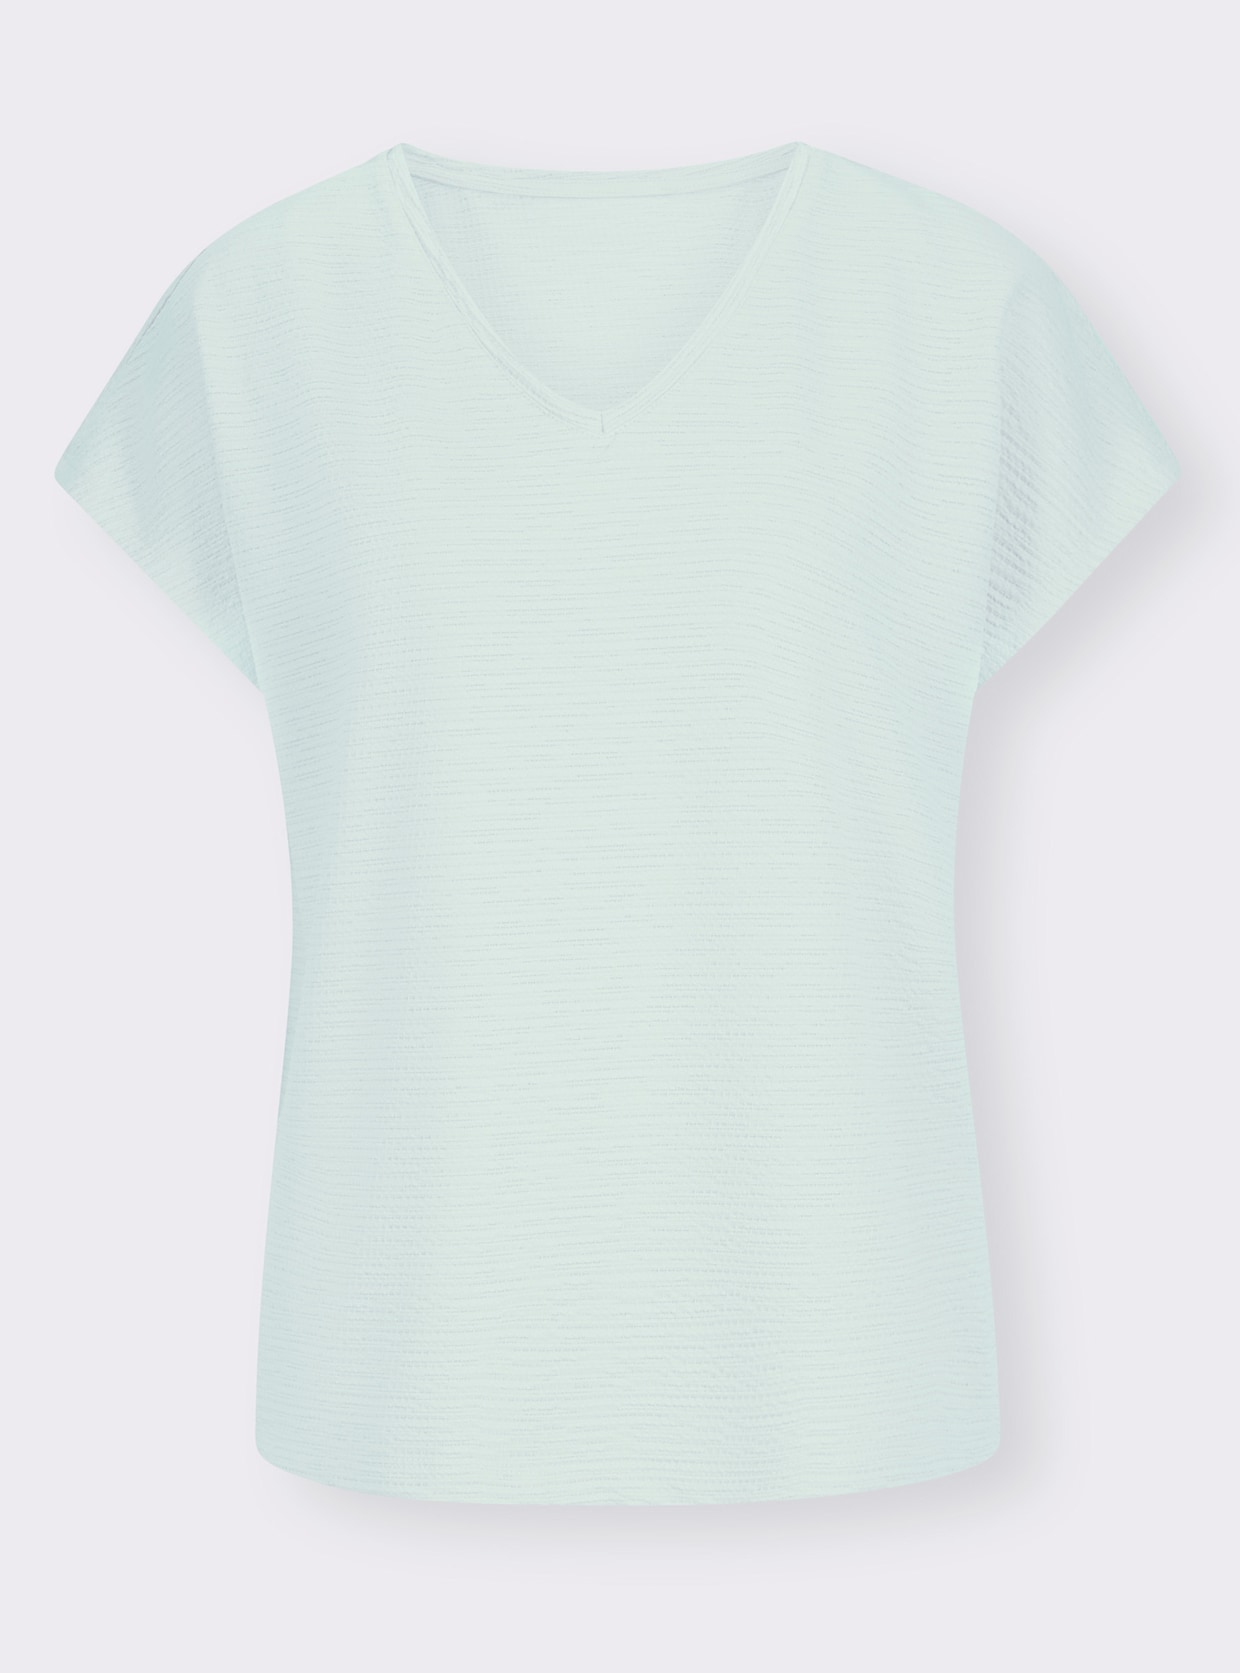 heine Shirt - zacht mint